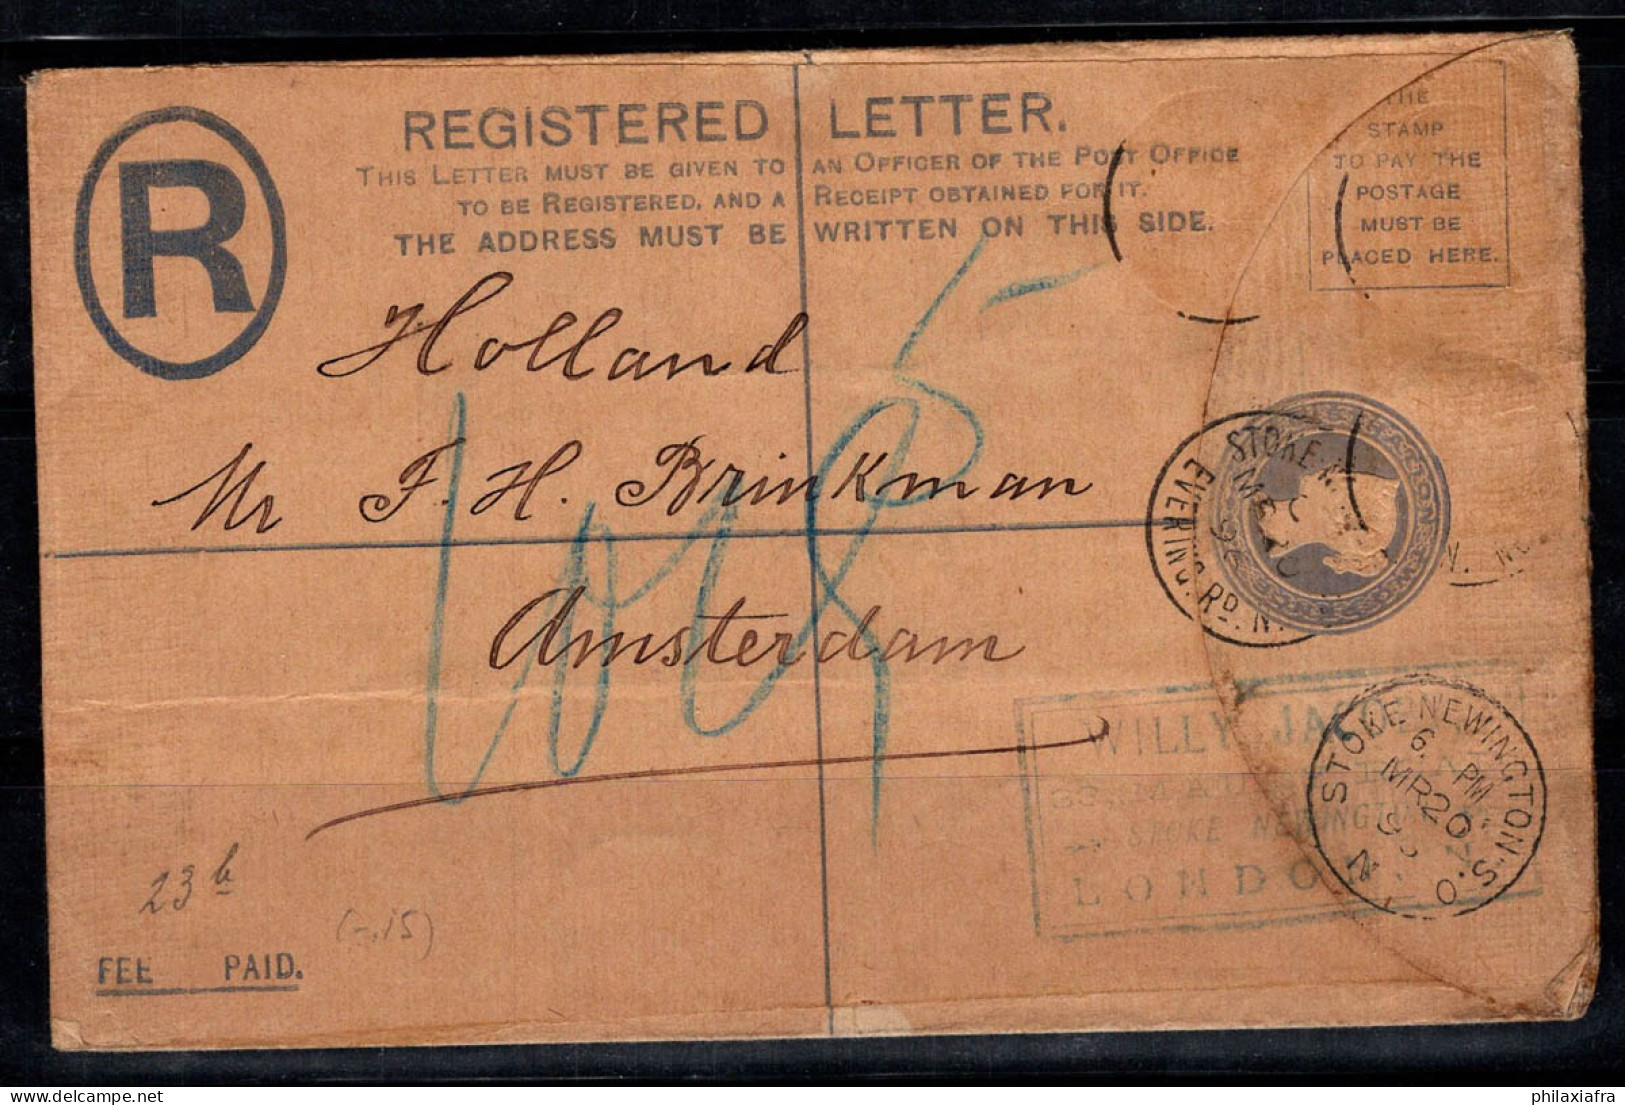 Grande-Bretagne 1896 Enveloppe 100% Recommandée Amsterdam, Reine Victoria - Lettres & Documents